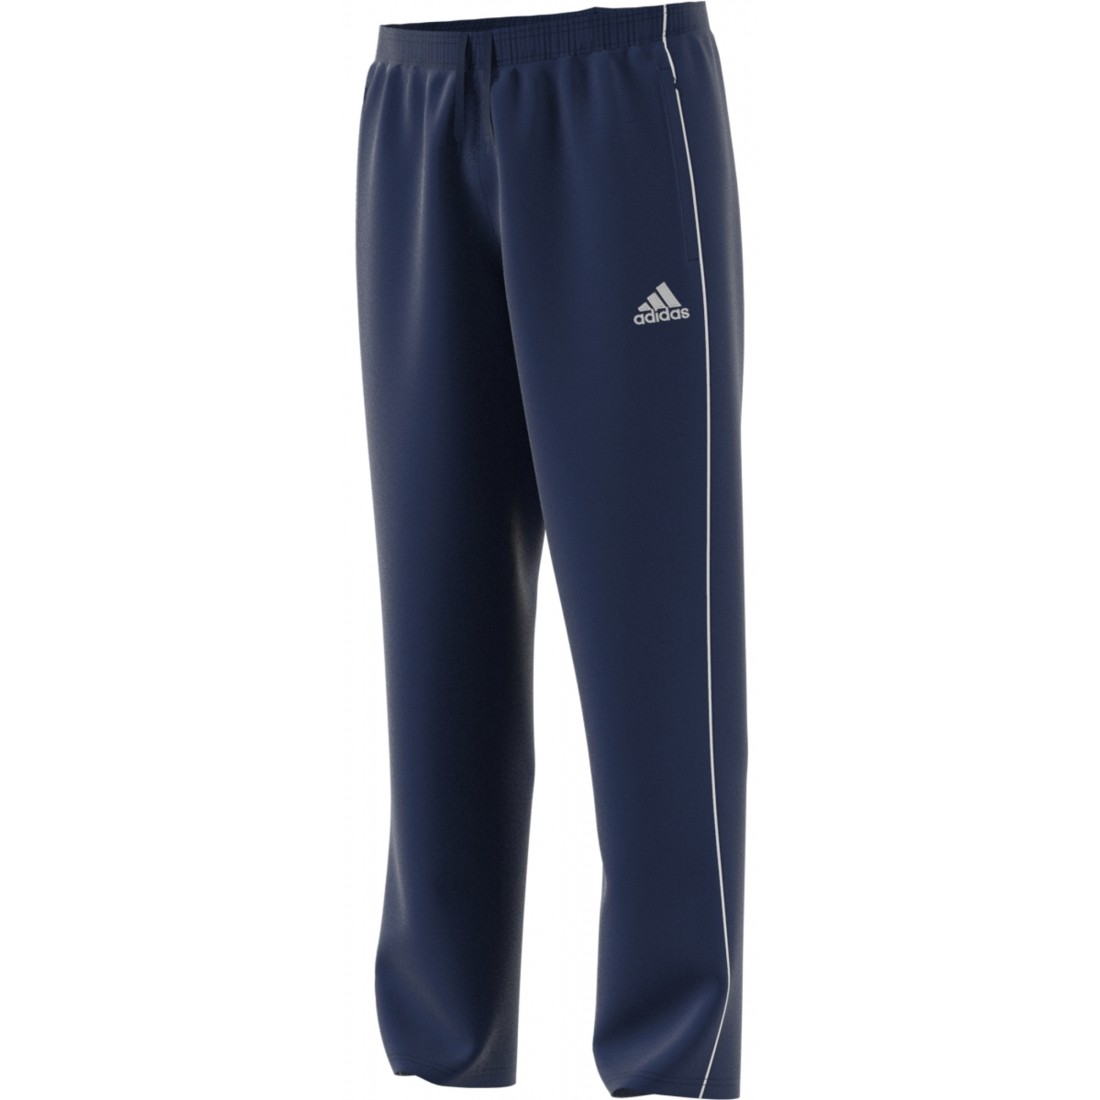 Adidas pantalon chandal PRESENTACIÓN CORE 18 hombre | Deportes Periso. de equipamiento deportivo